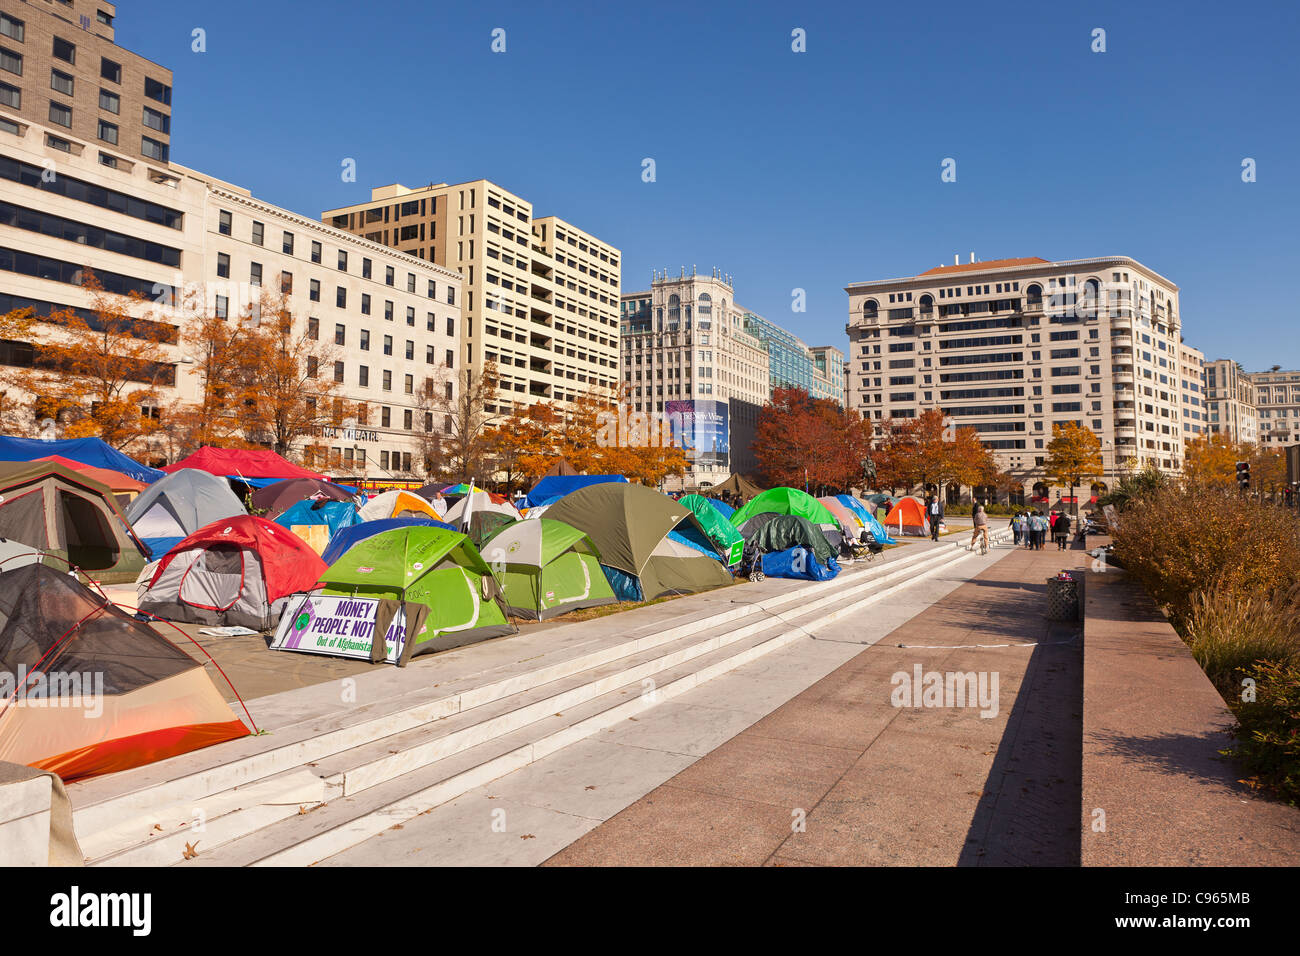 WASHINGTON, DC USA - Occupy Washington protest camp at Freedom Plaza. Stock Photo